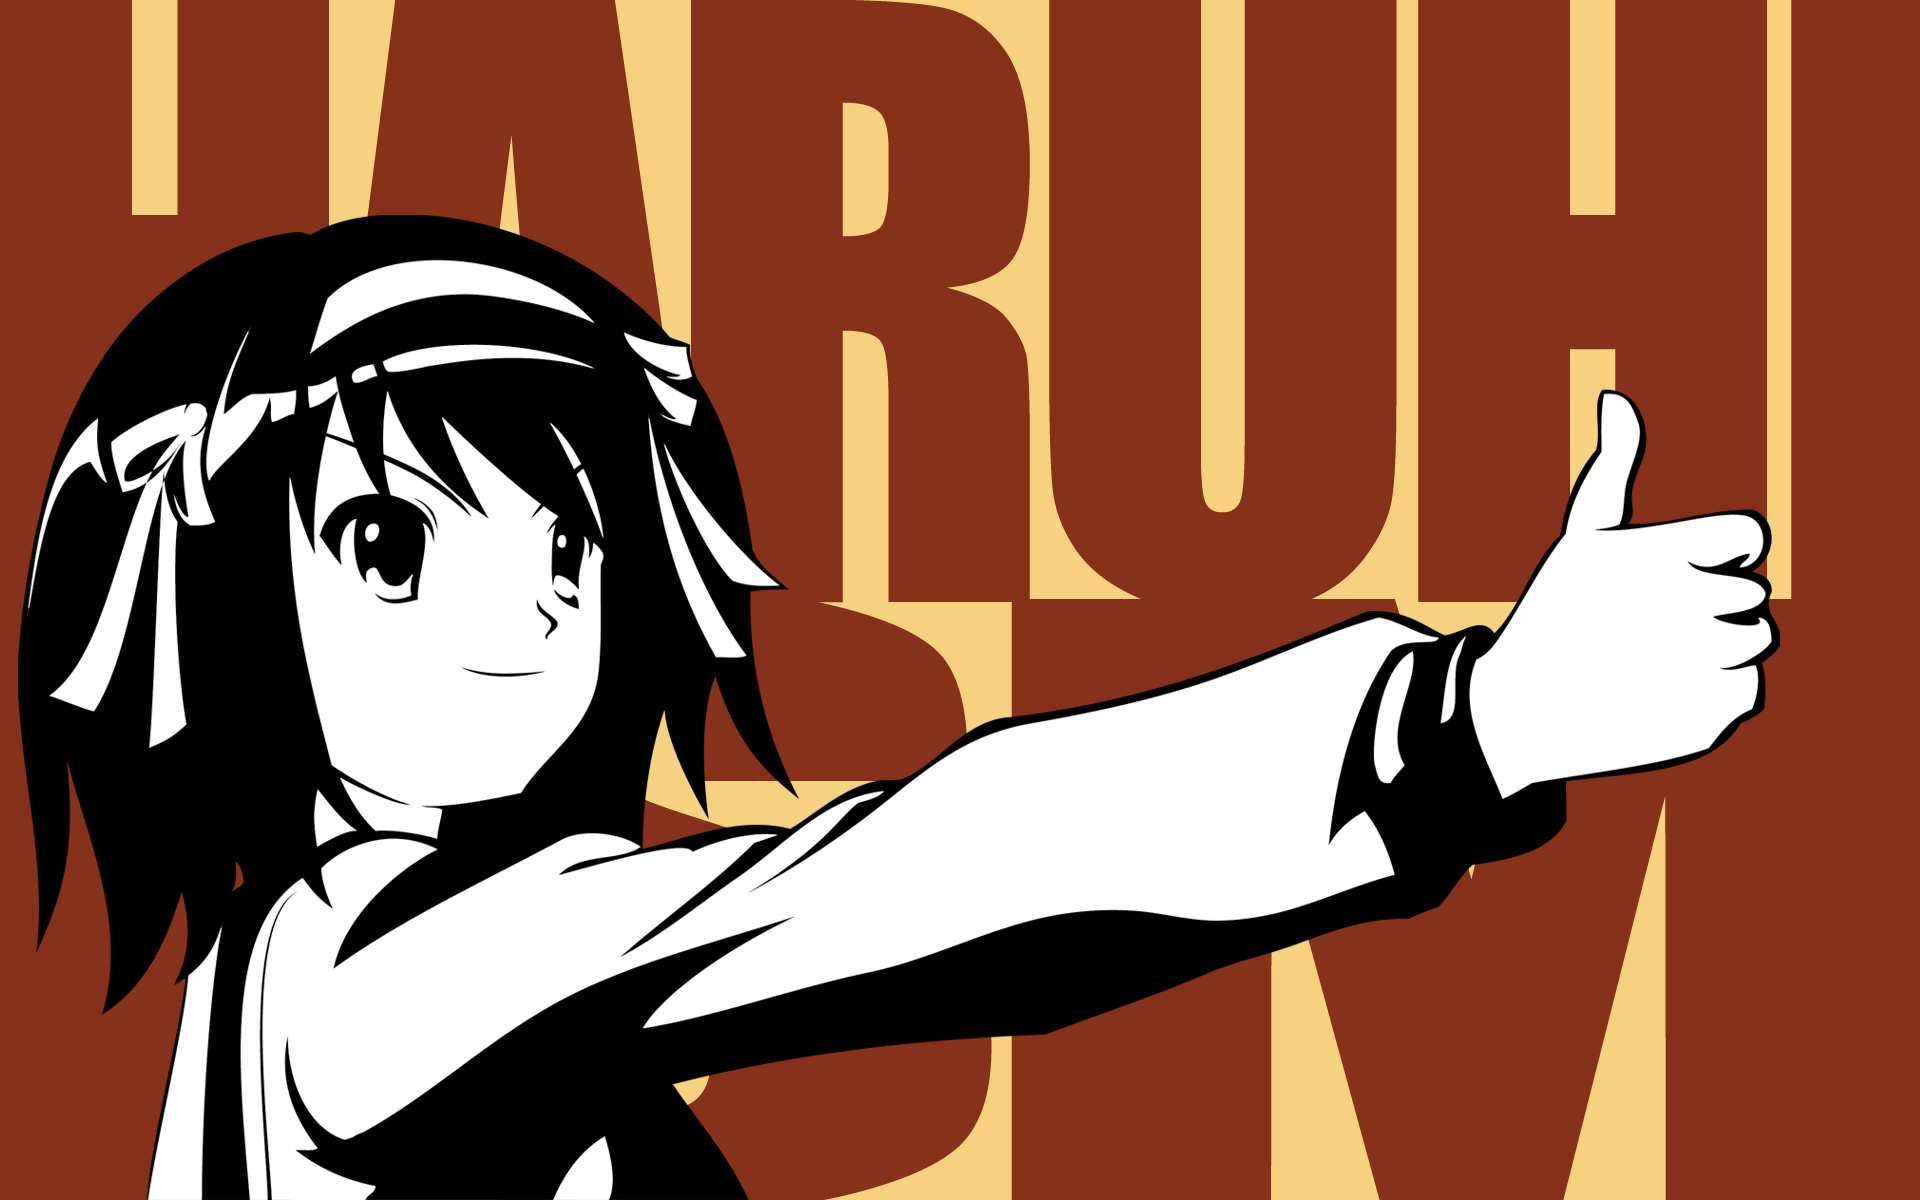 Baixe gratuitamente a imagem Anime, Haruhi Suzumiya, Suzumiya Haruhi No Yûutsu na área de trabalho do seu PC